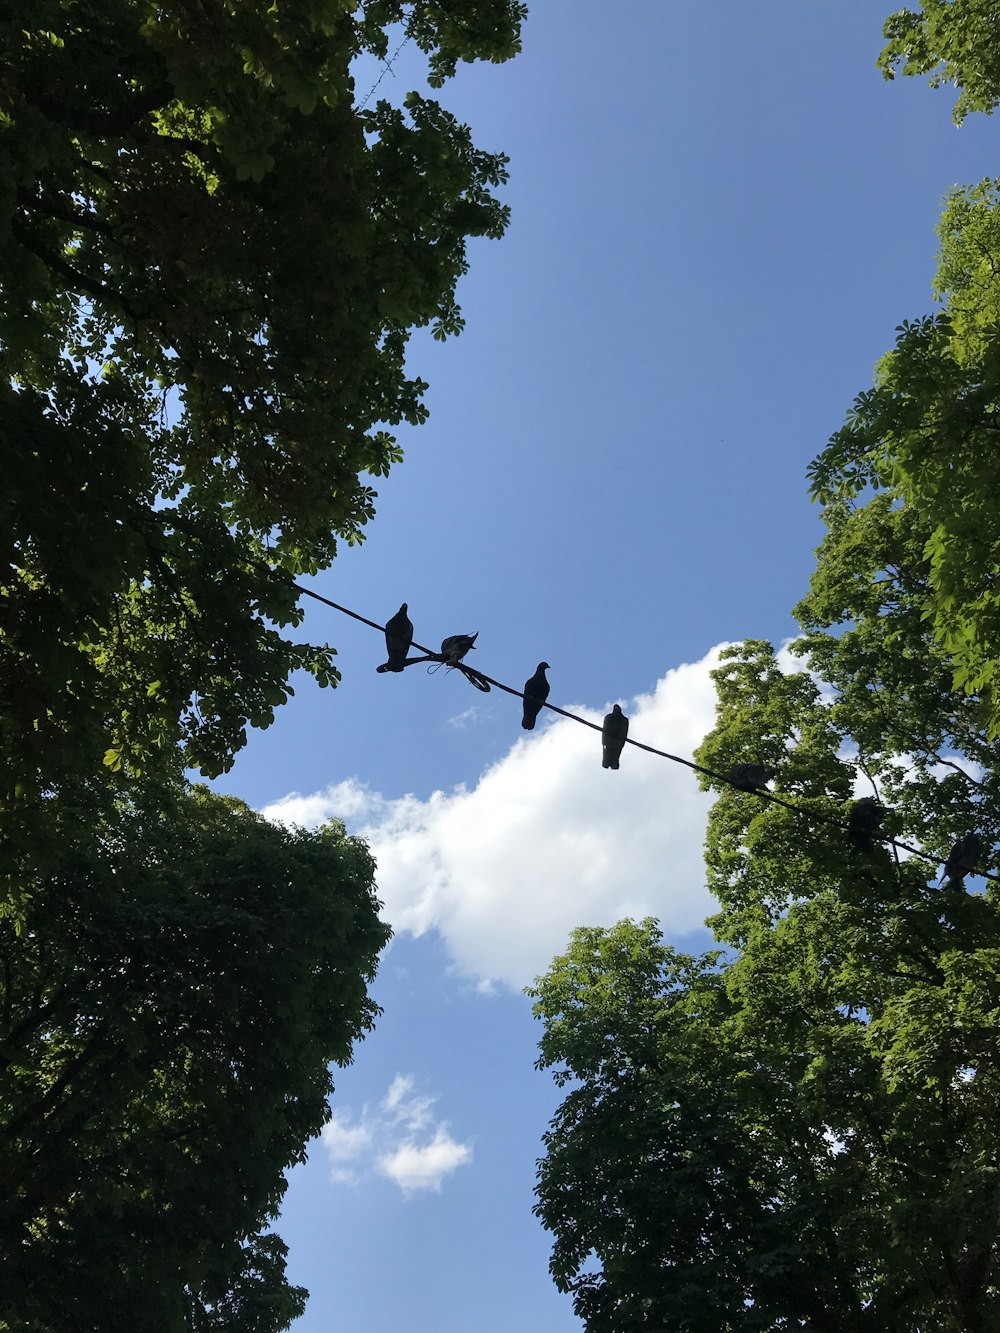 birds on electric line near green leaf trees